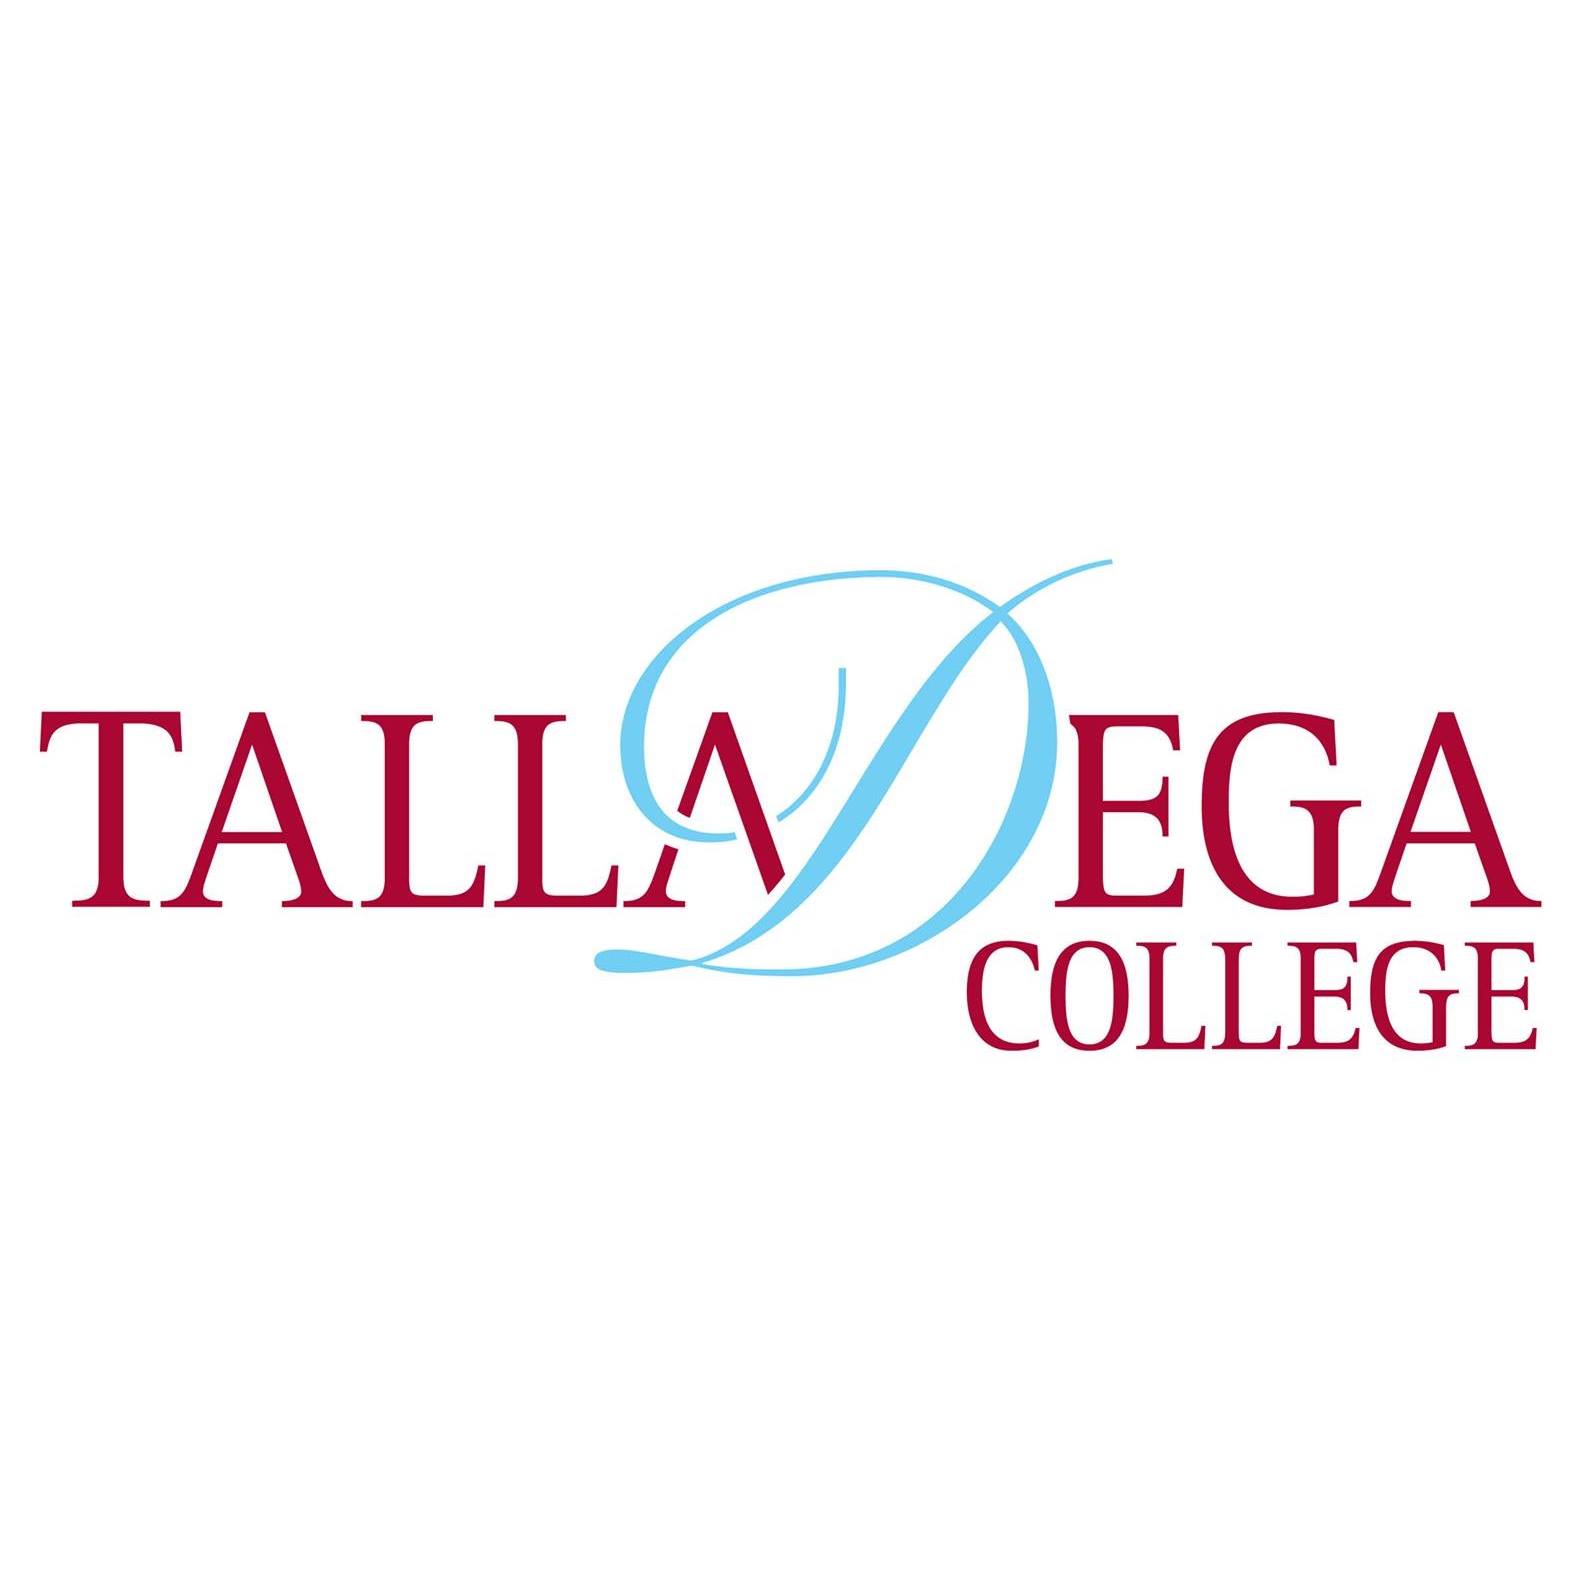  Talladega College Announces 3rd Consecutive Record-Setting Enrollment Increase